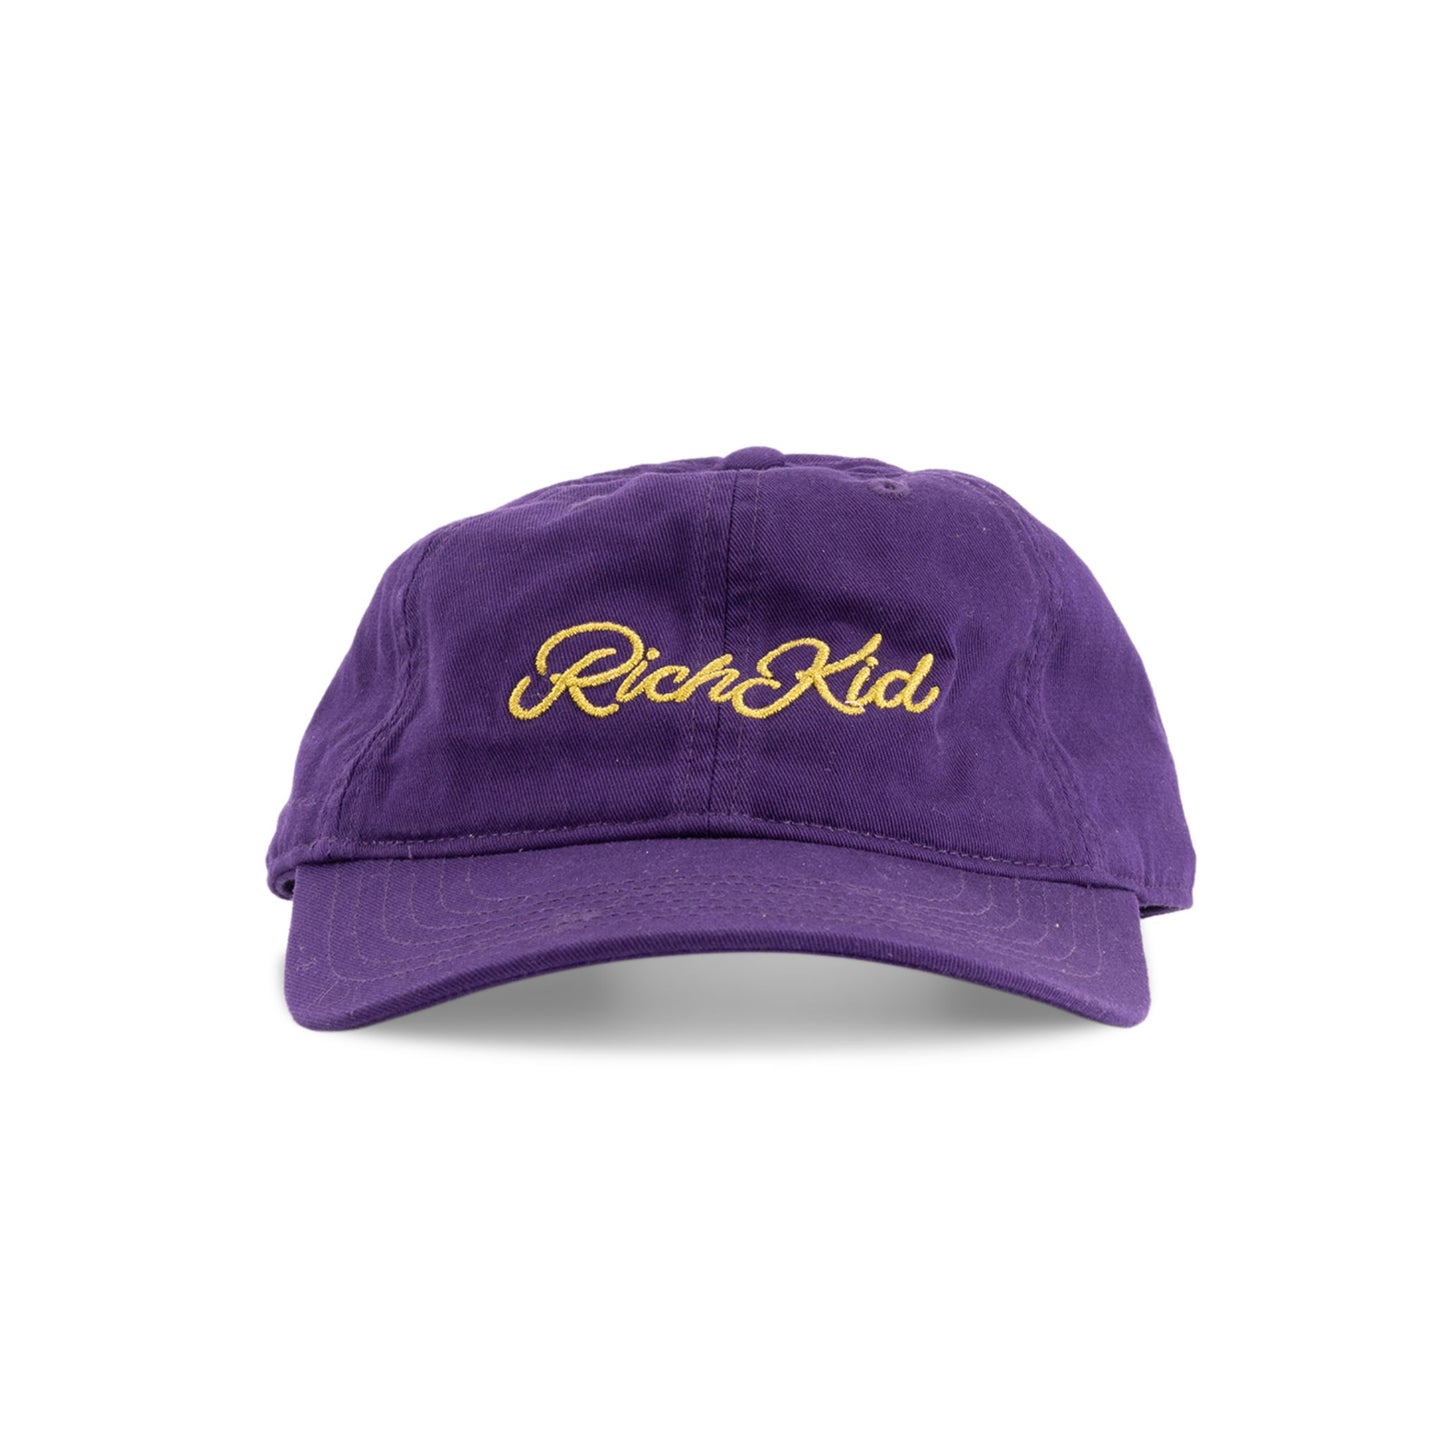 IDEA - Rich Kid Hat